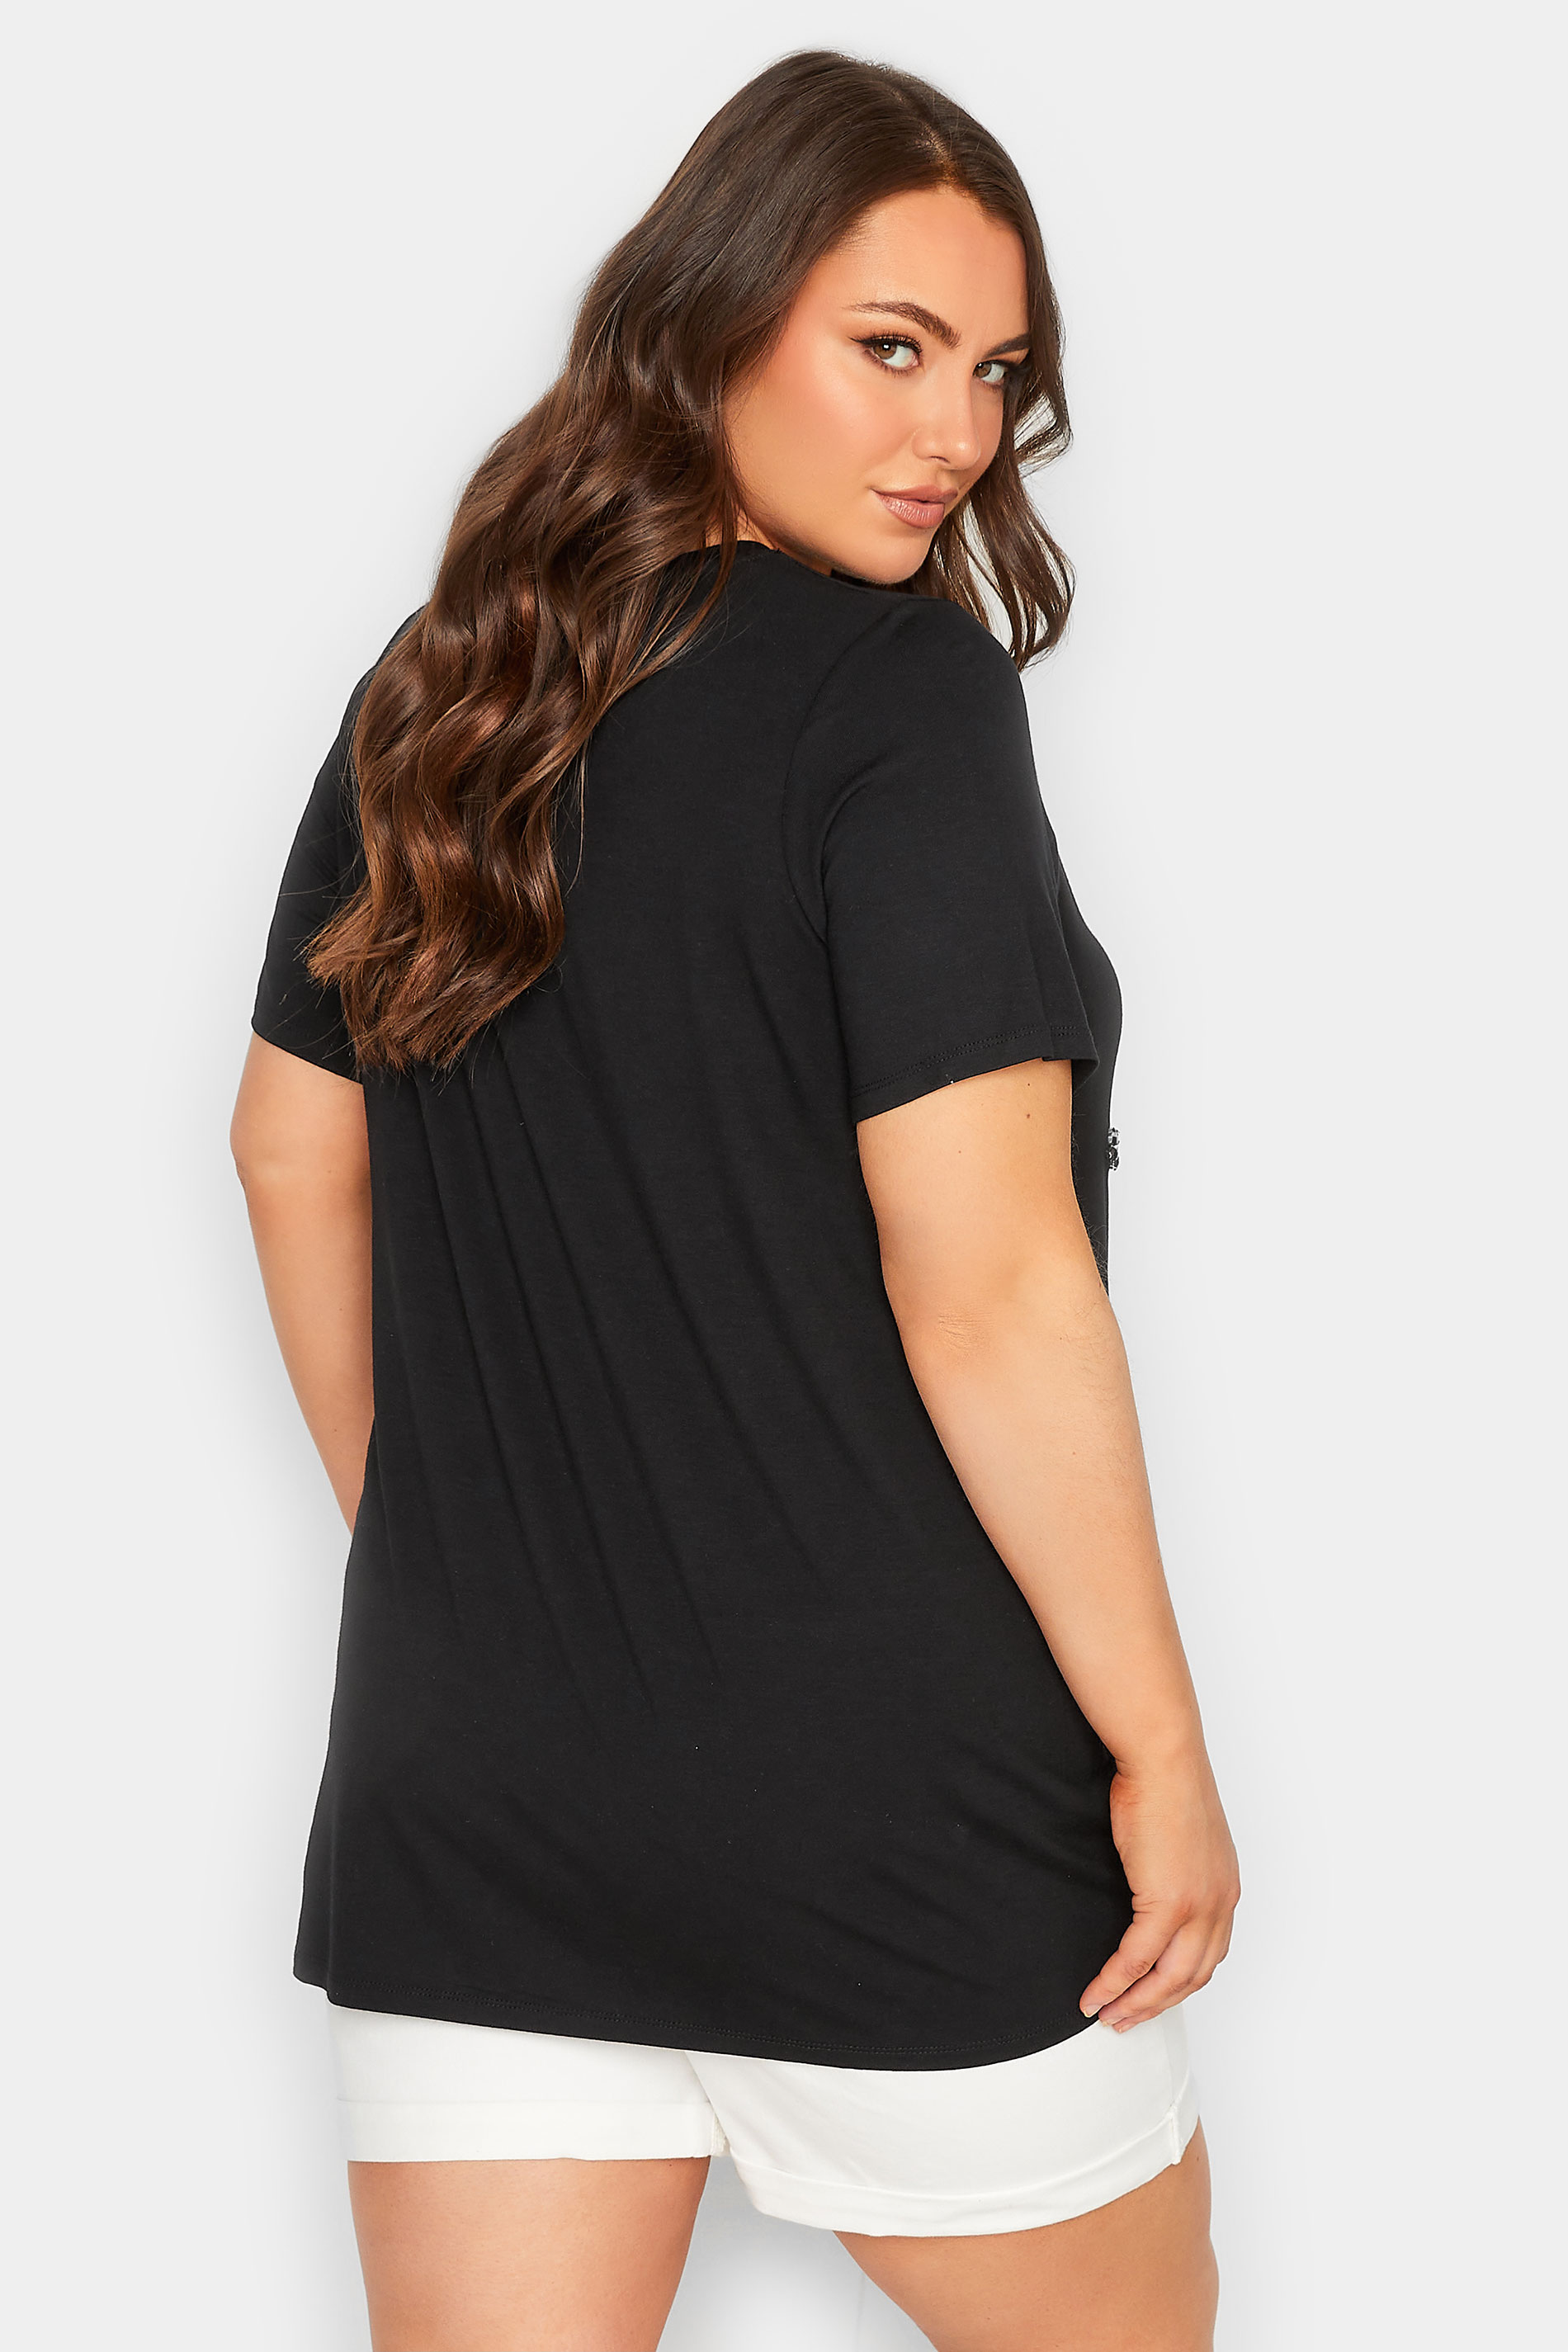 YOURS Plus Size Black Diamante Embellished T-Shirt | Yours Clothing 3